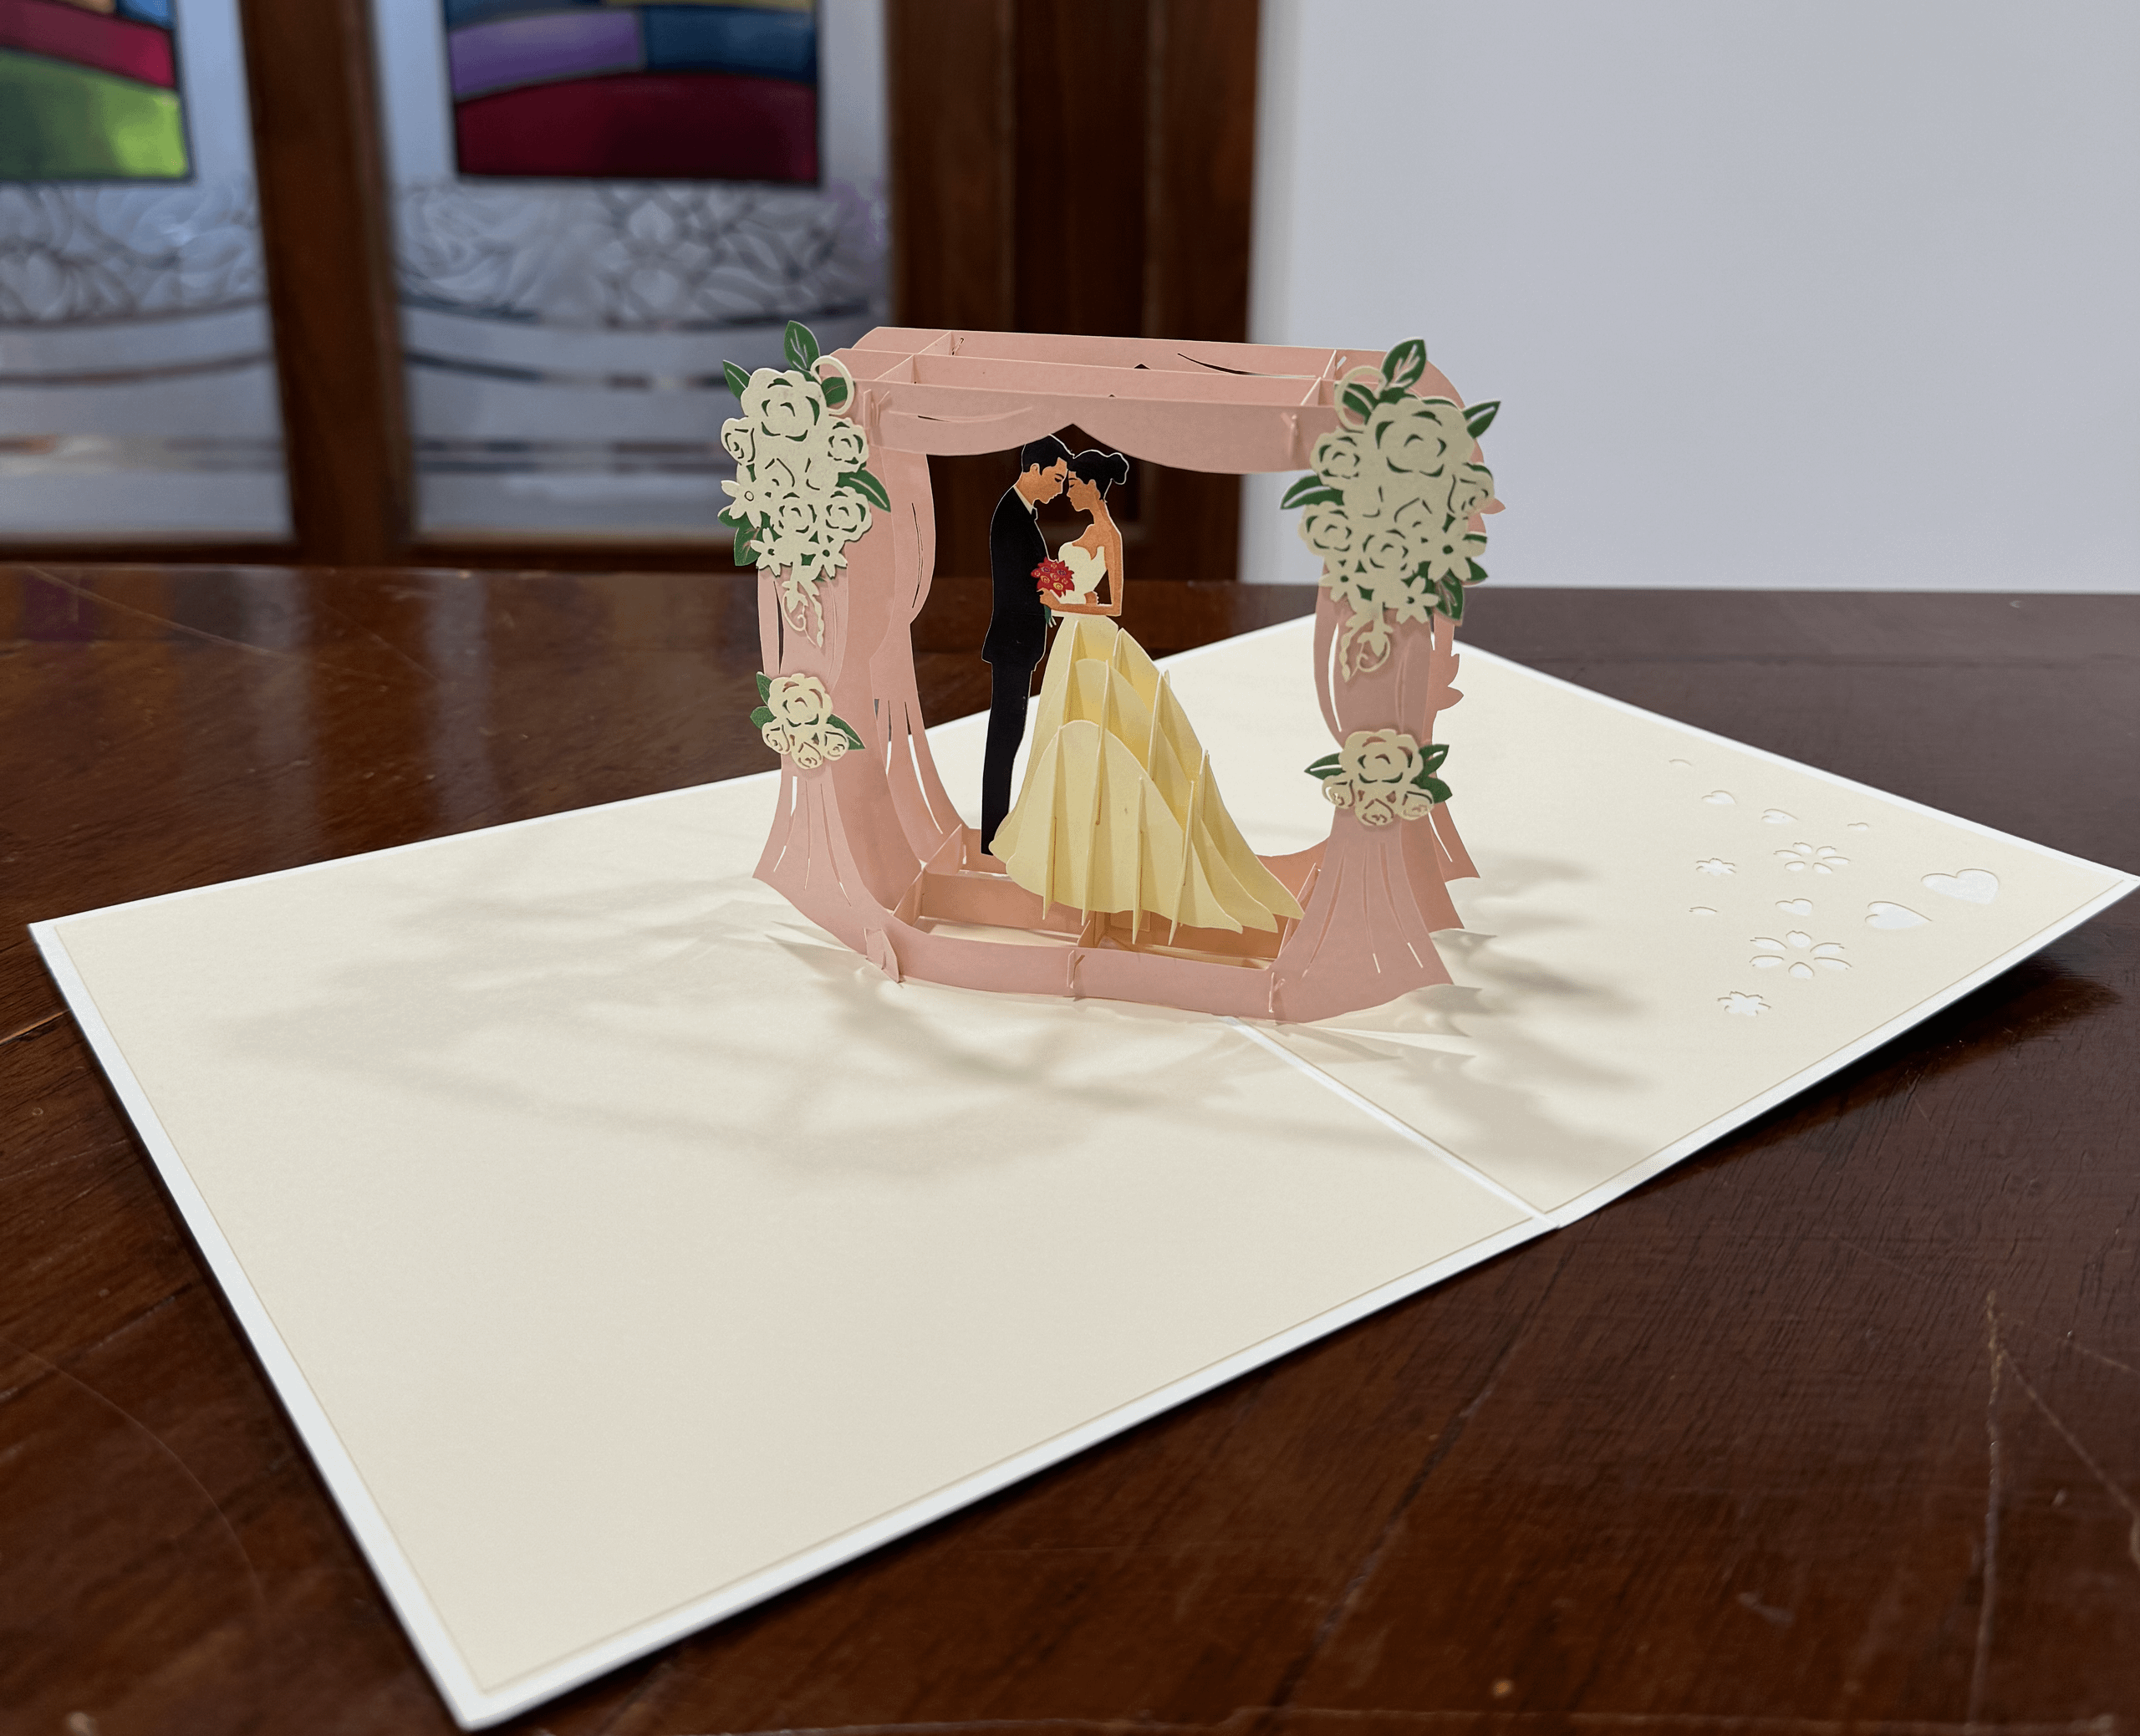 HAPPY WEDDING DAY 2 POP-UP CARD